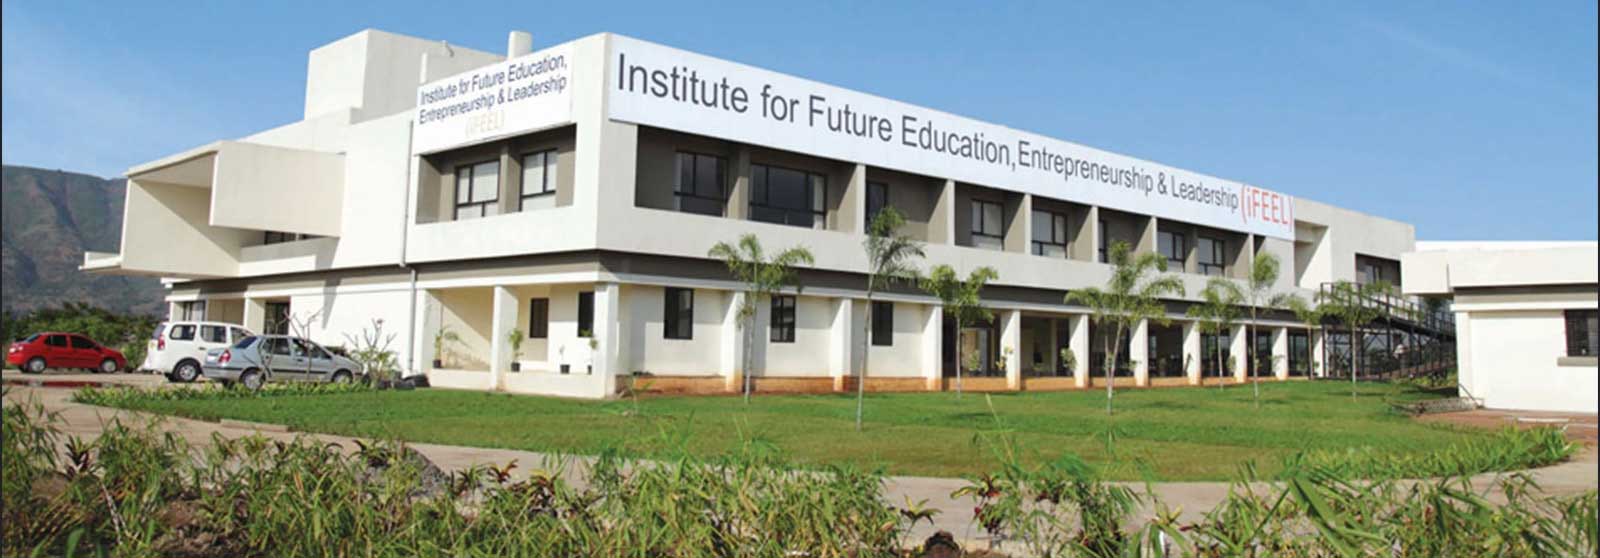 INSTITUTE FOR FUTURE EDUCATION, ENTREPRENEURSHIP AND LEADERSHIP Image